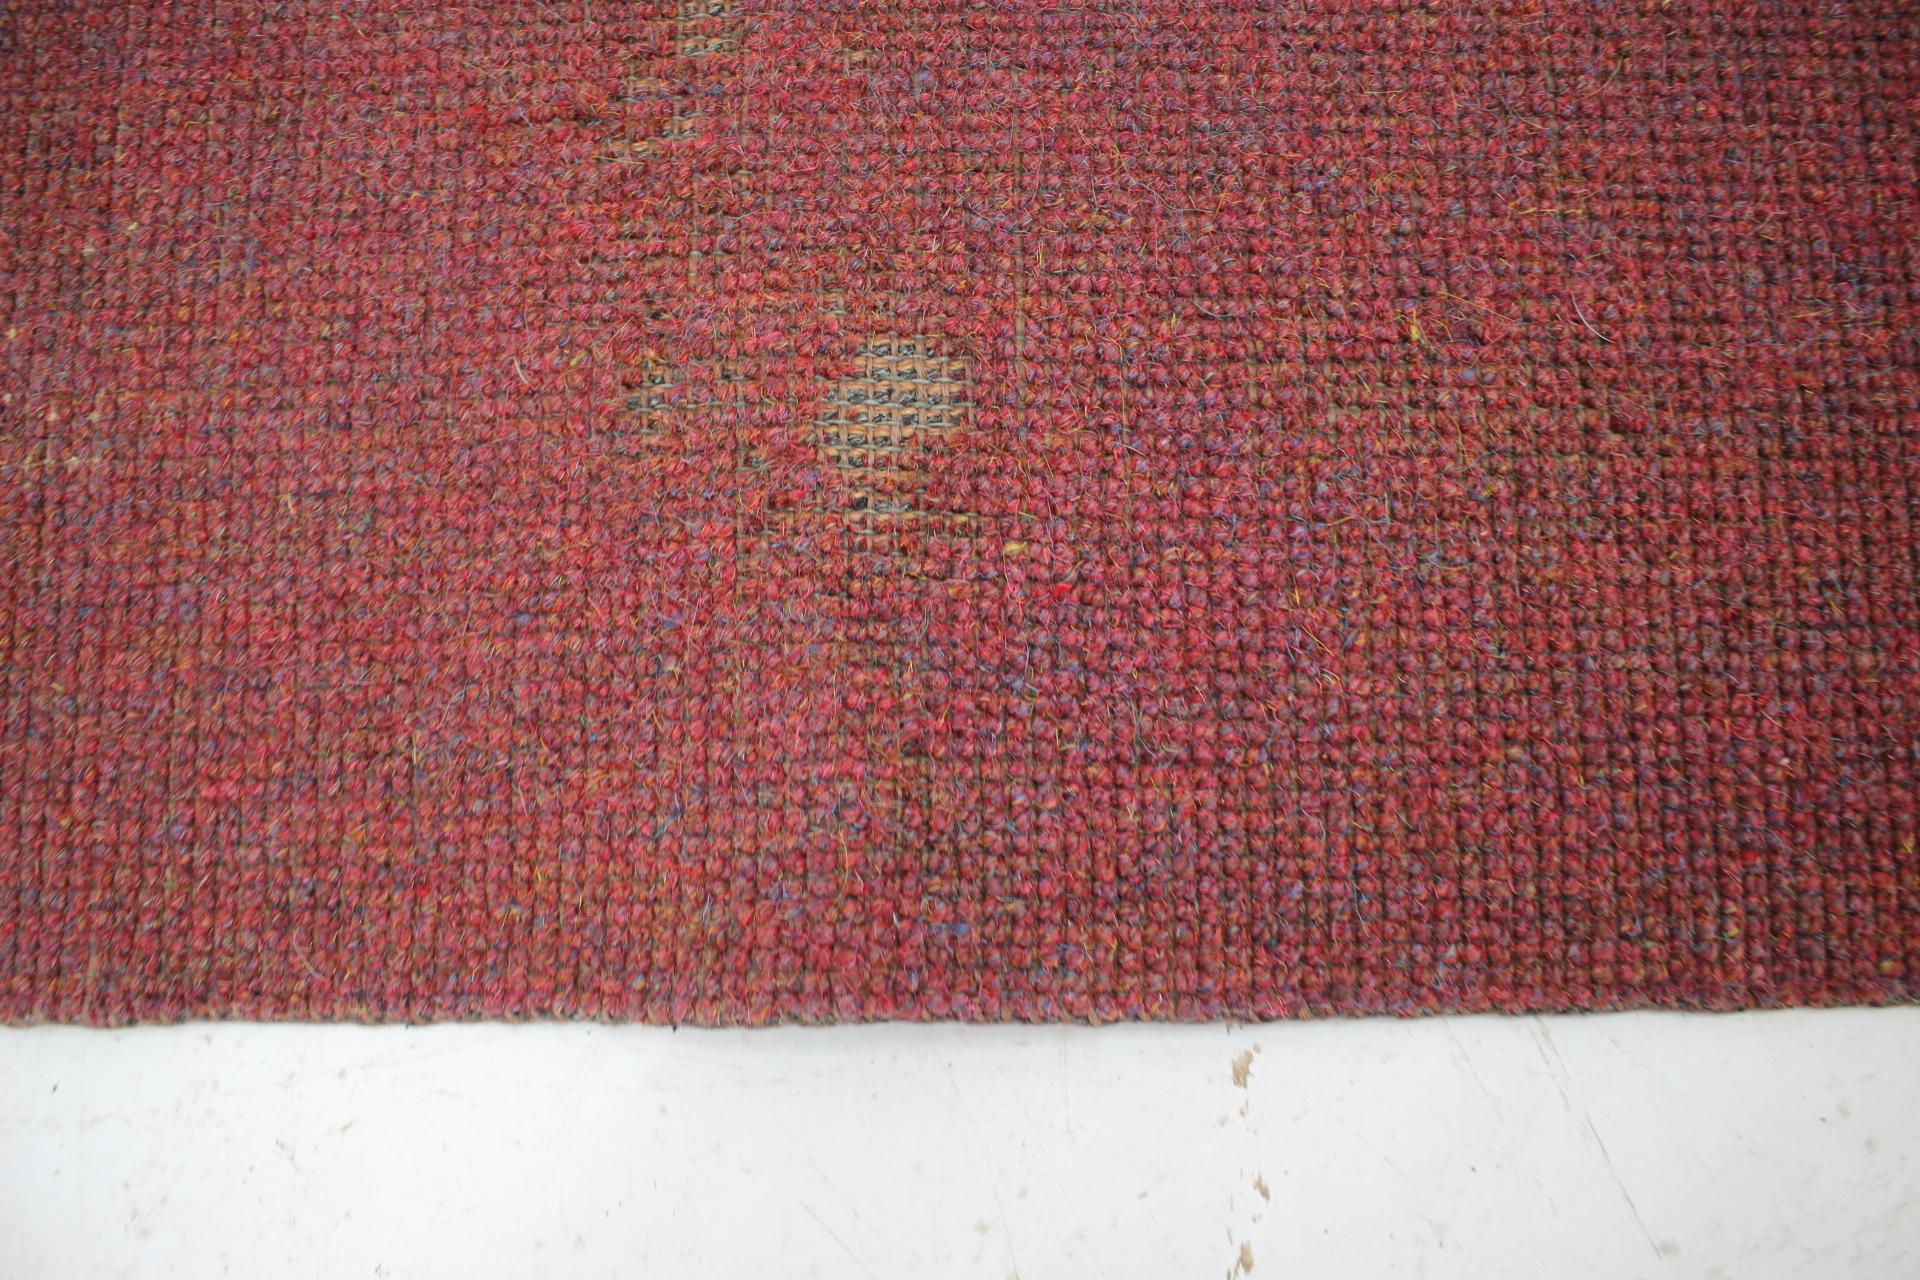 German Midcentury Design Carpet, 1970s